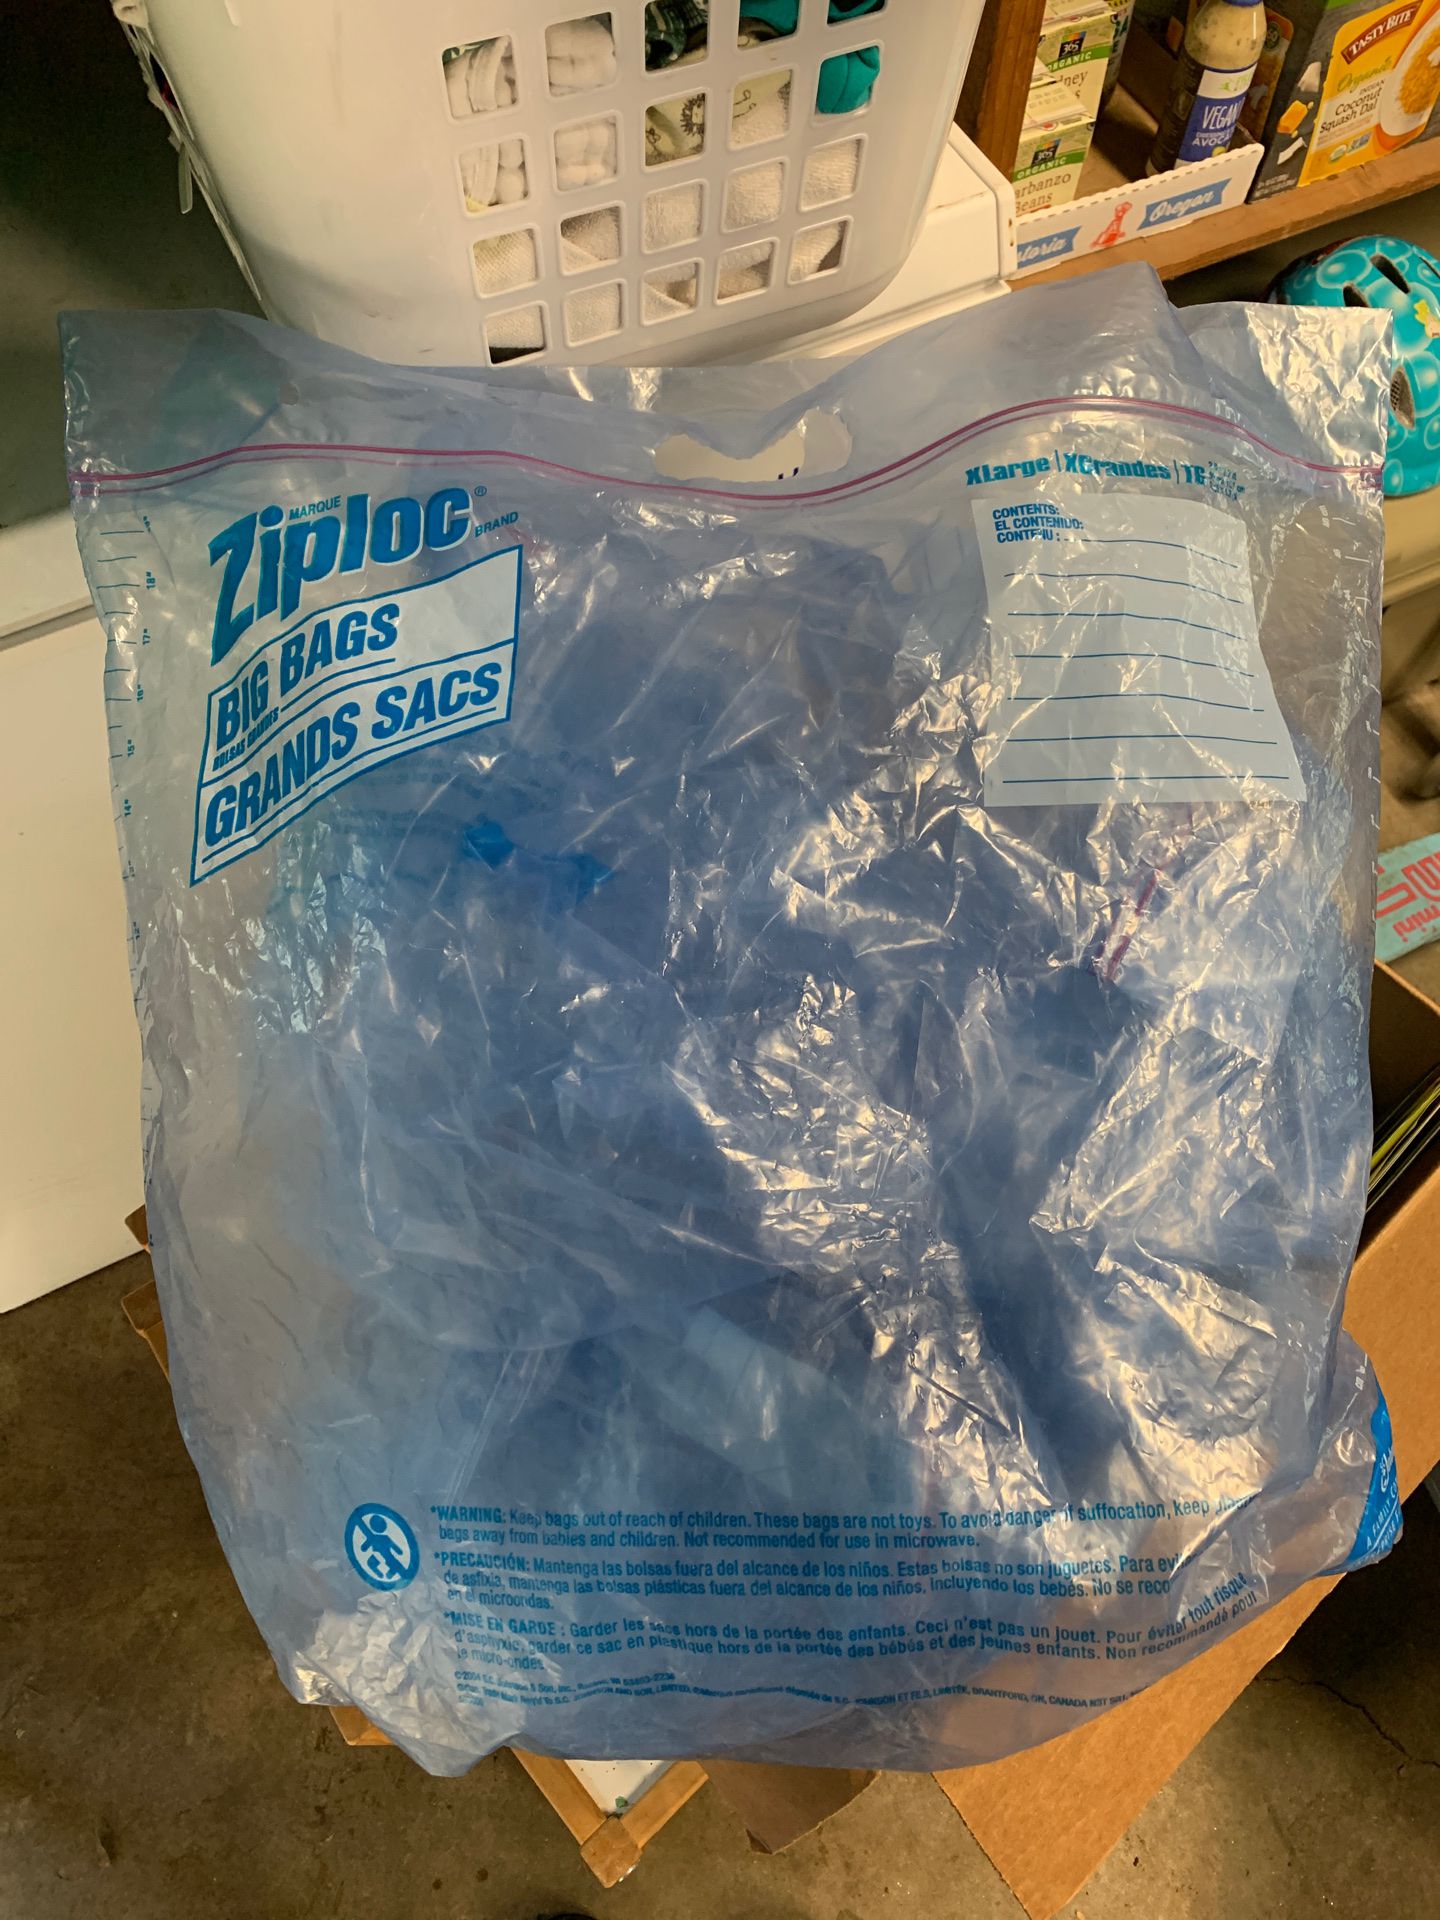 Free ziploc storage bags and space saver vacuum bags